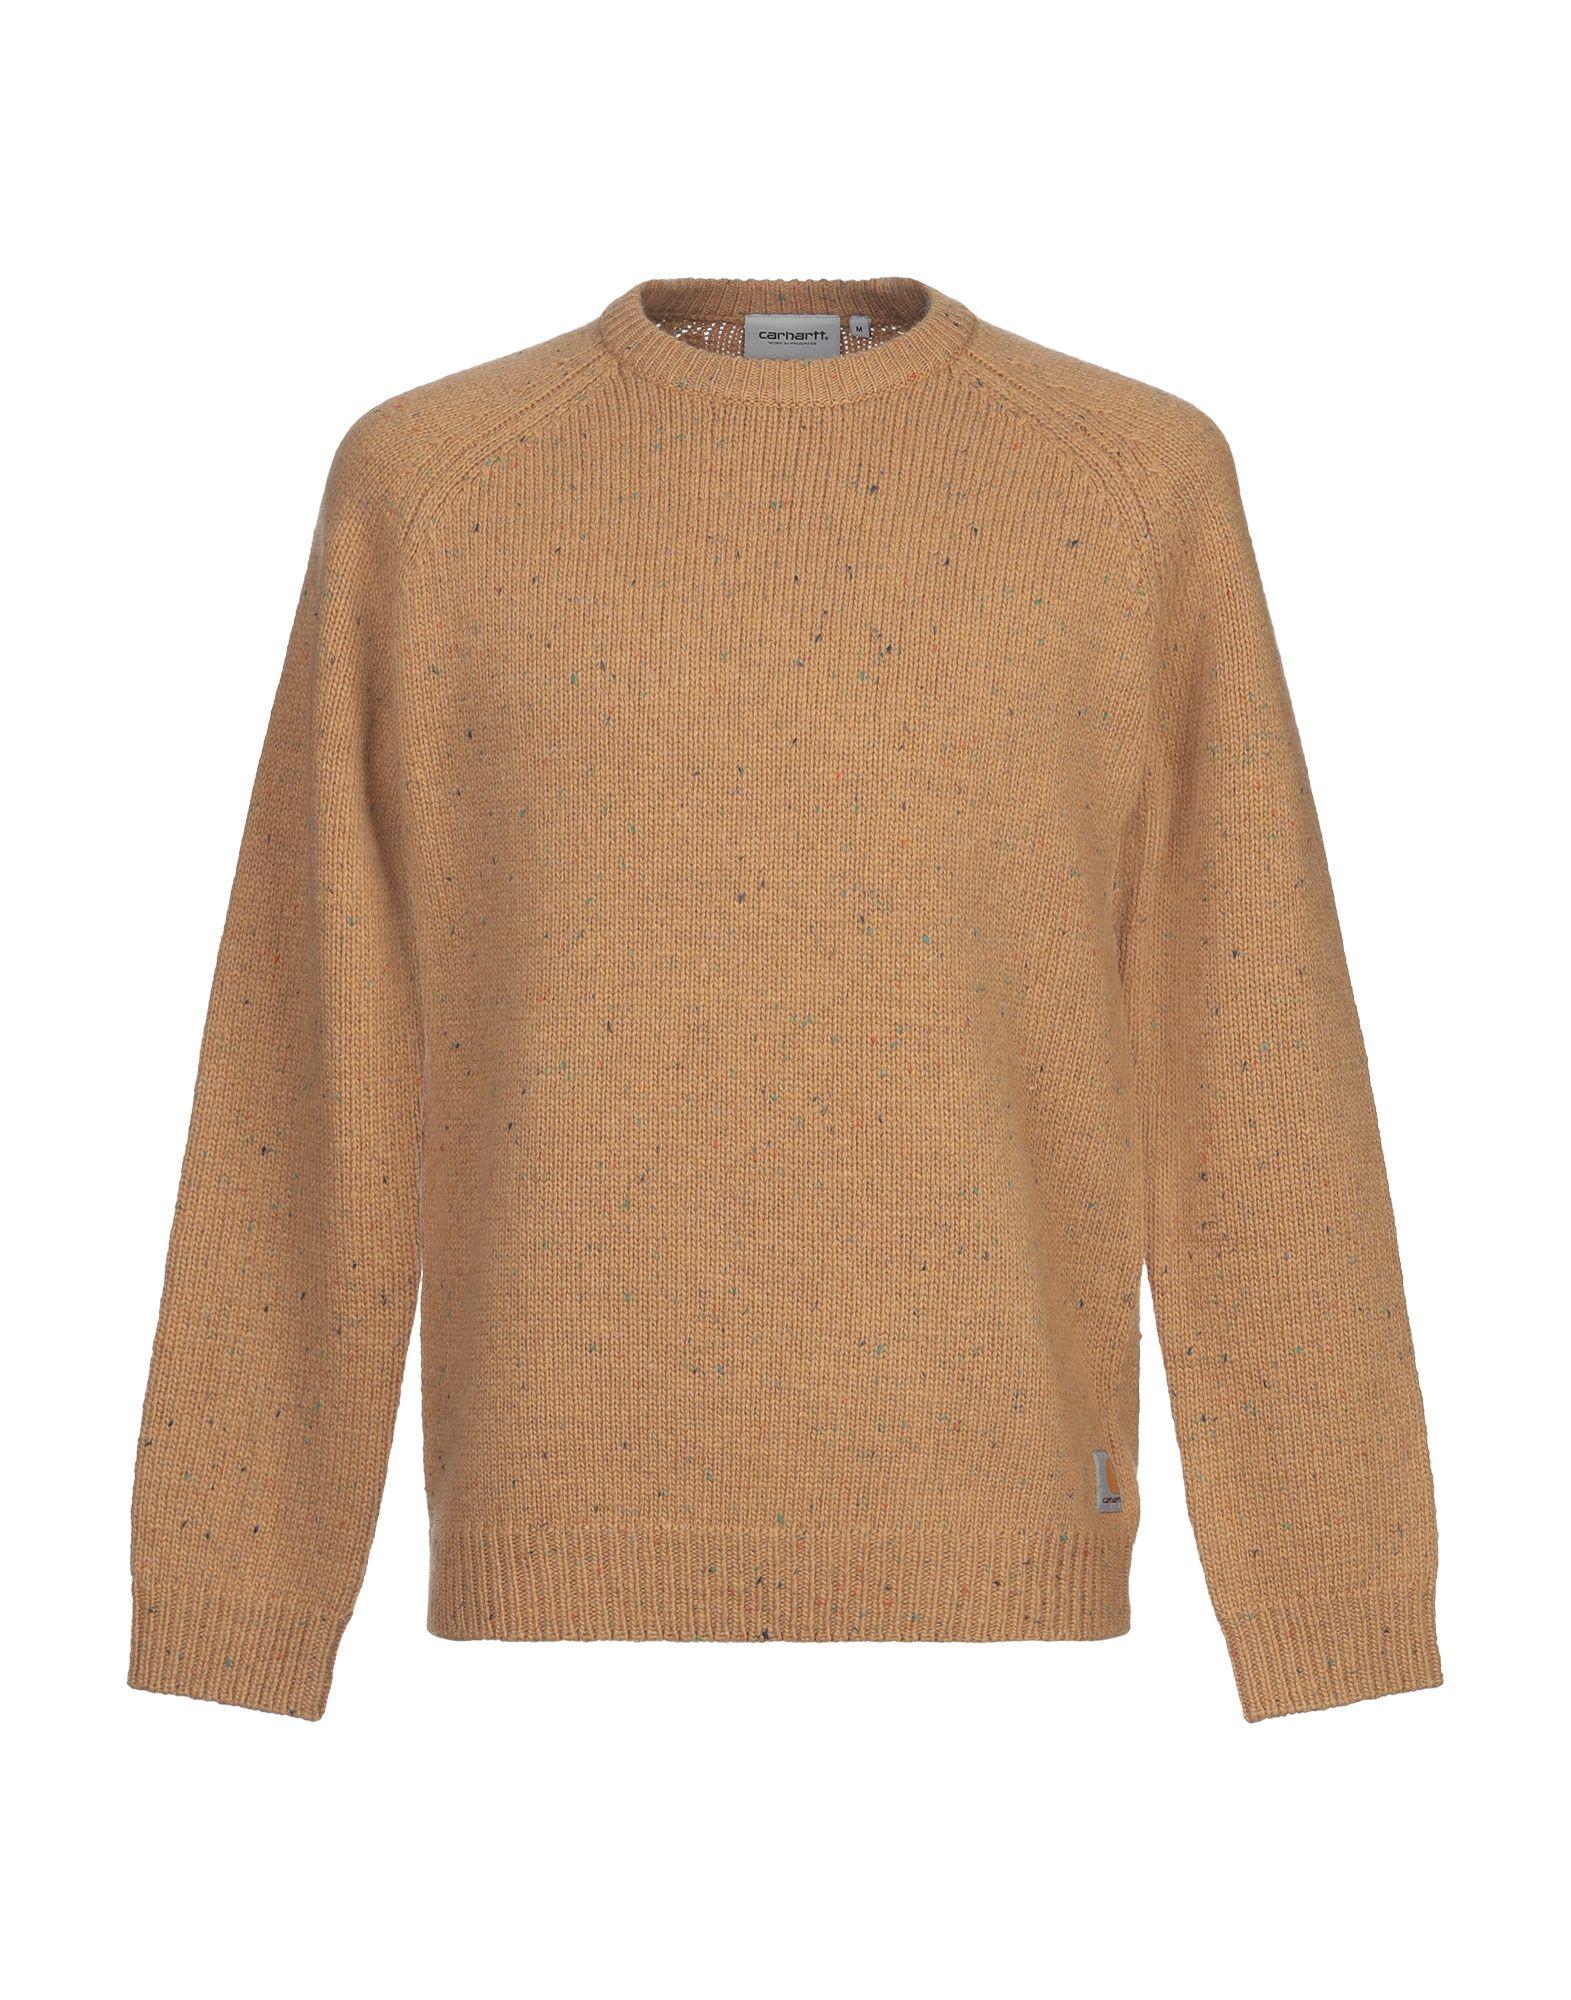 Carhartt Wool Sweater in Brown for Men - Lyst